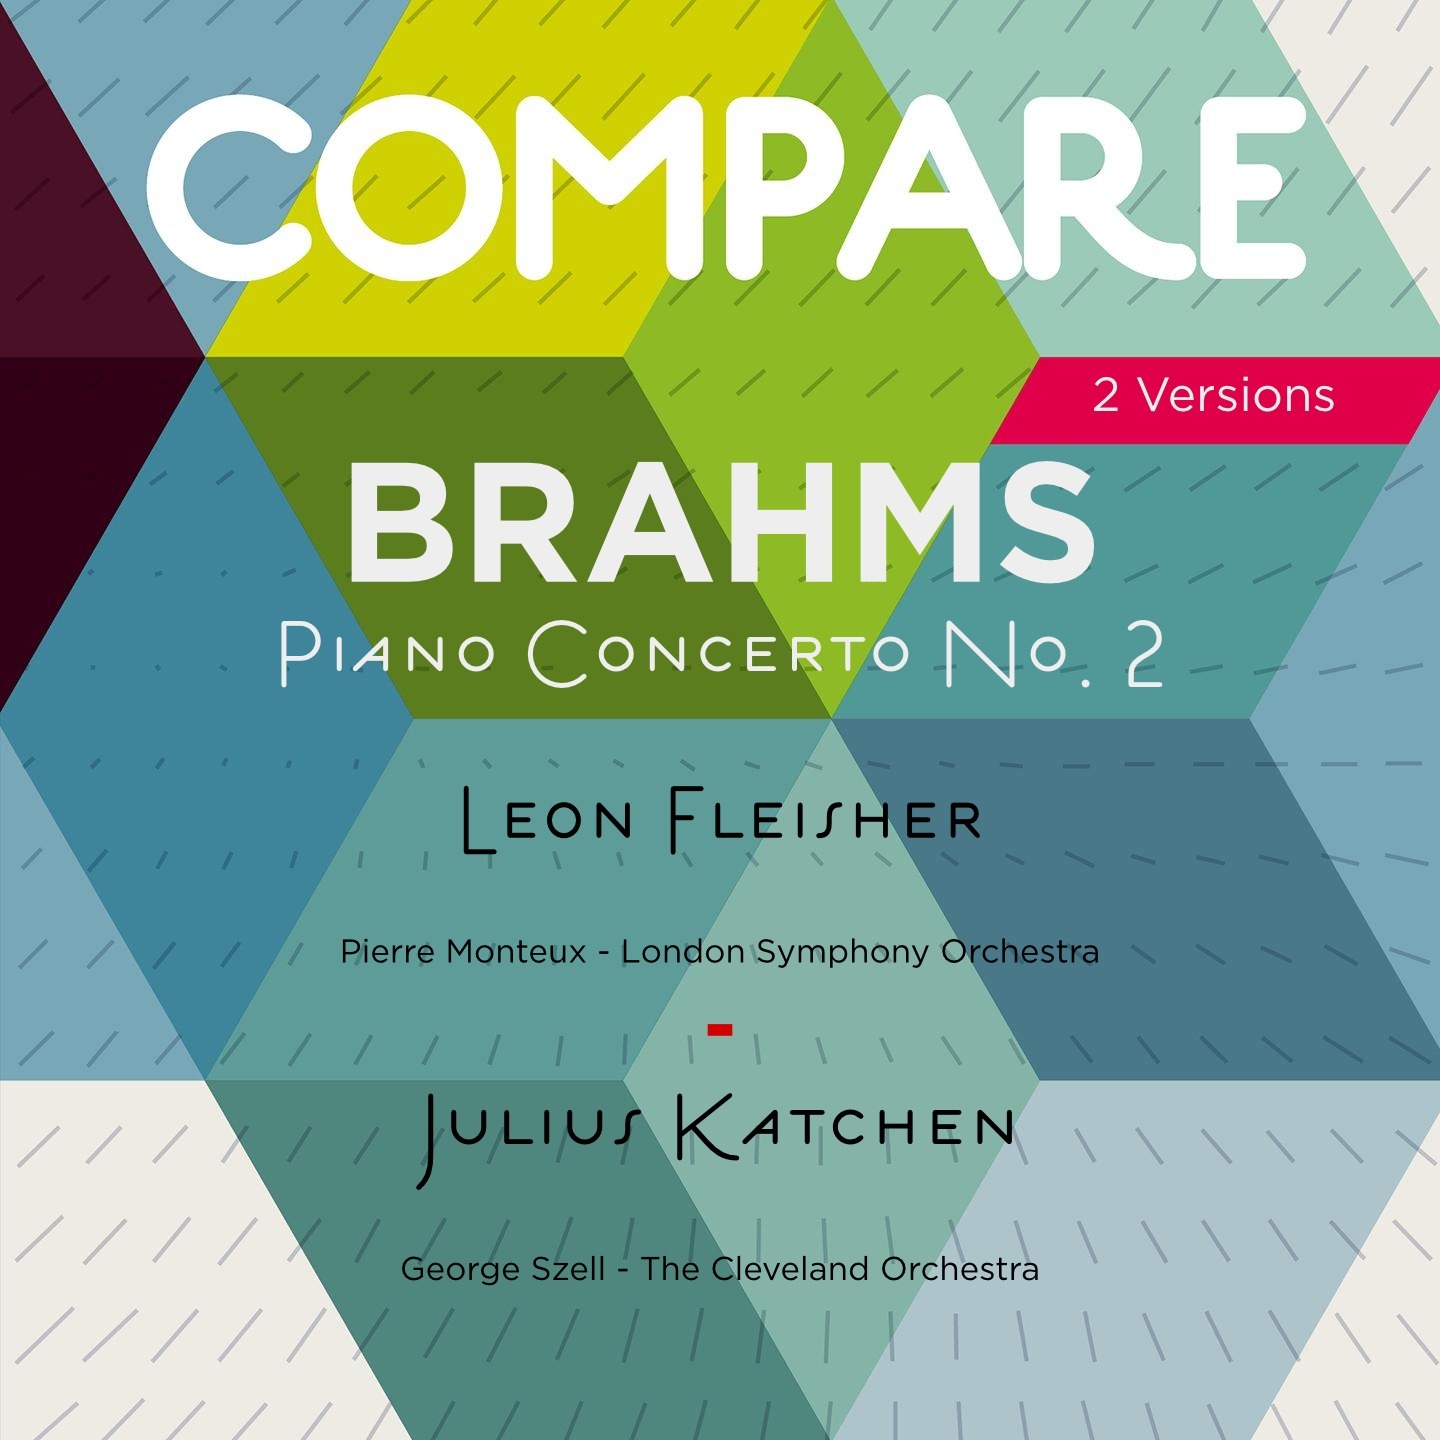 Brahms: Piano Concerto No. 2, Leon Fleisher vs. Julius Katchen